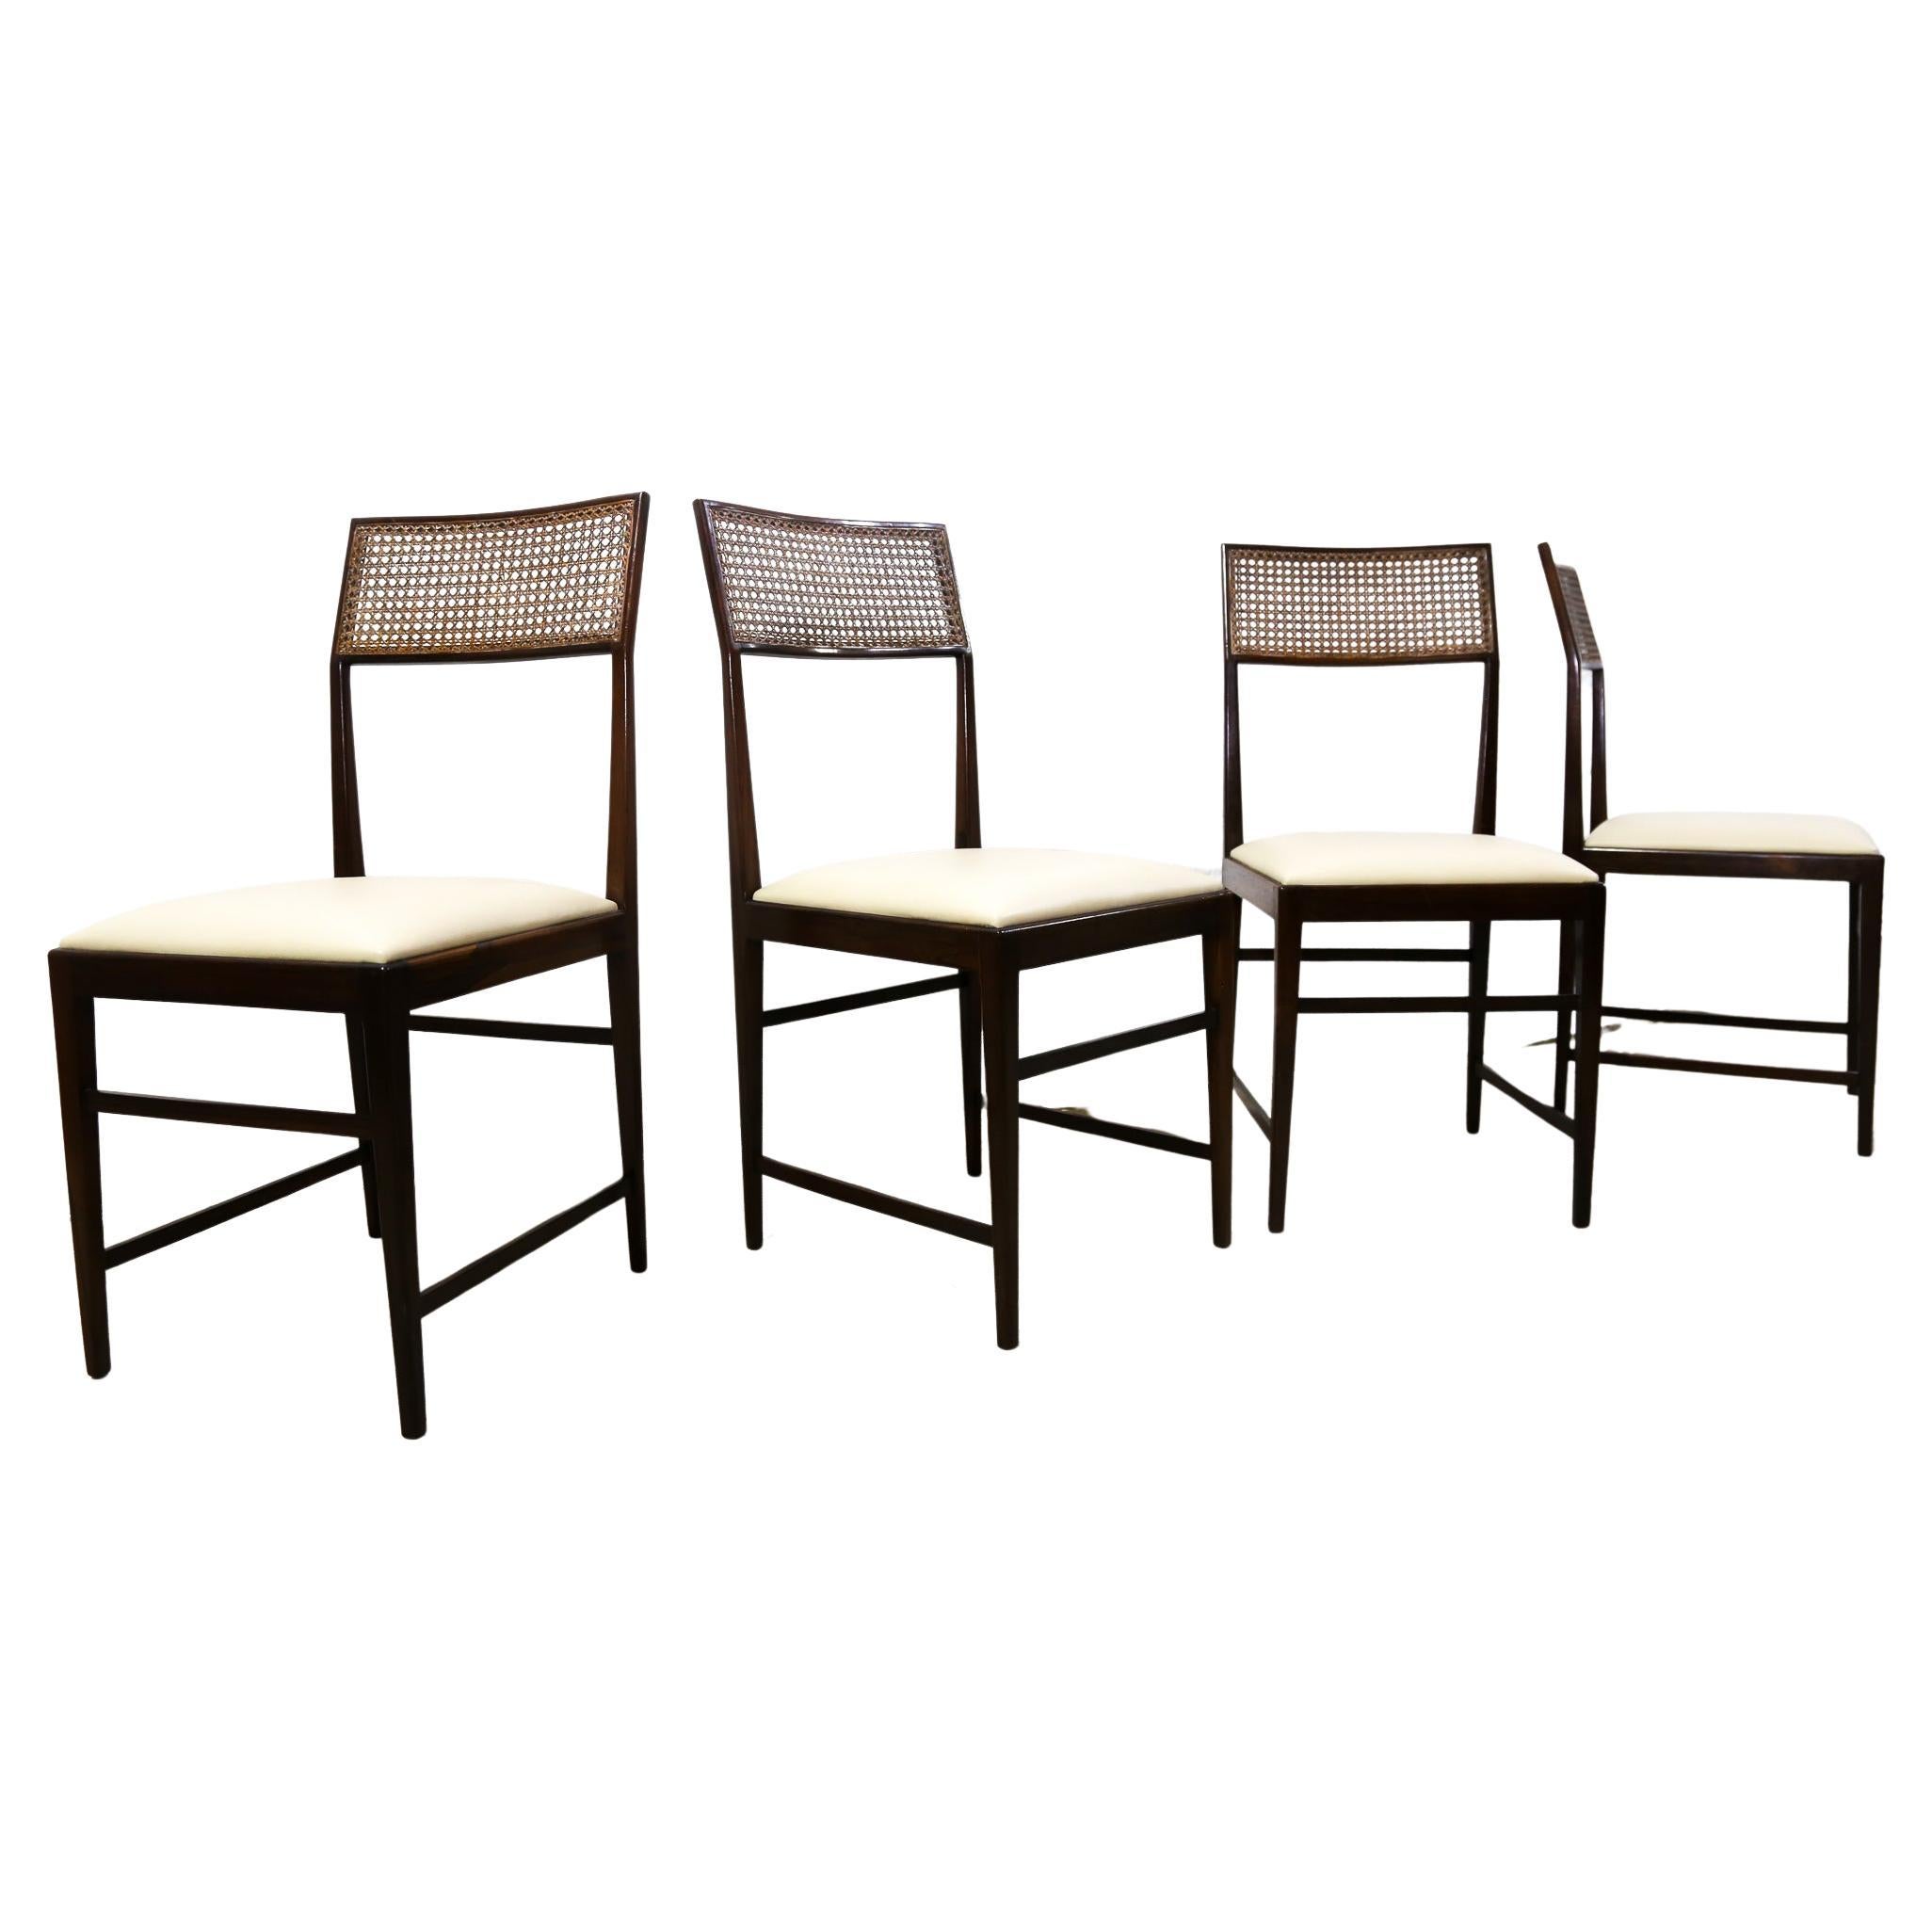 Brazilian Modern 4 Chair Set in Hardwood, Cane, Leather, Joaquim Tenreiro 1950s